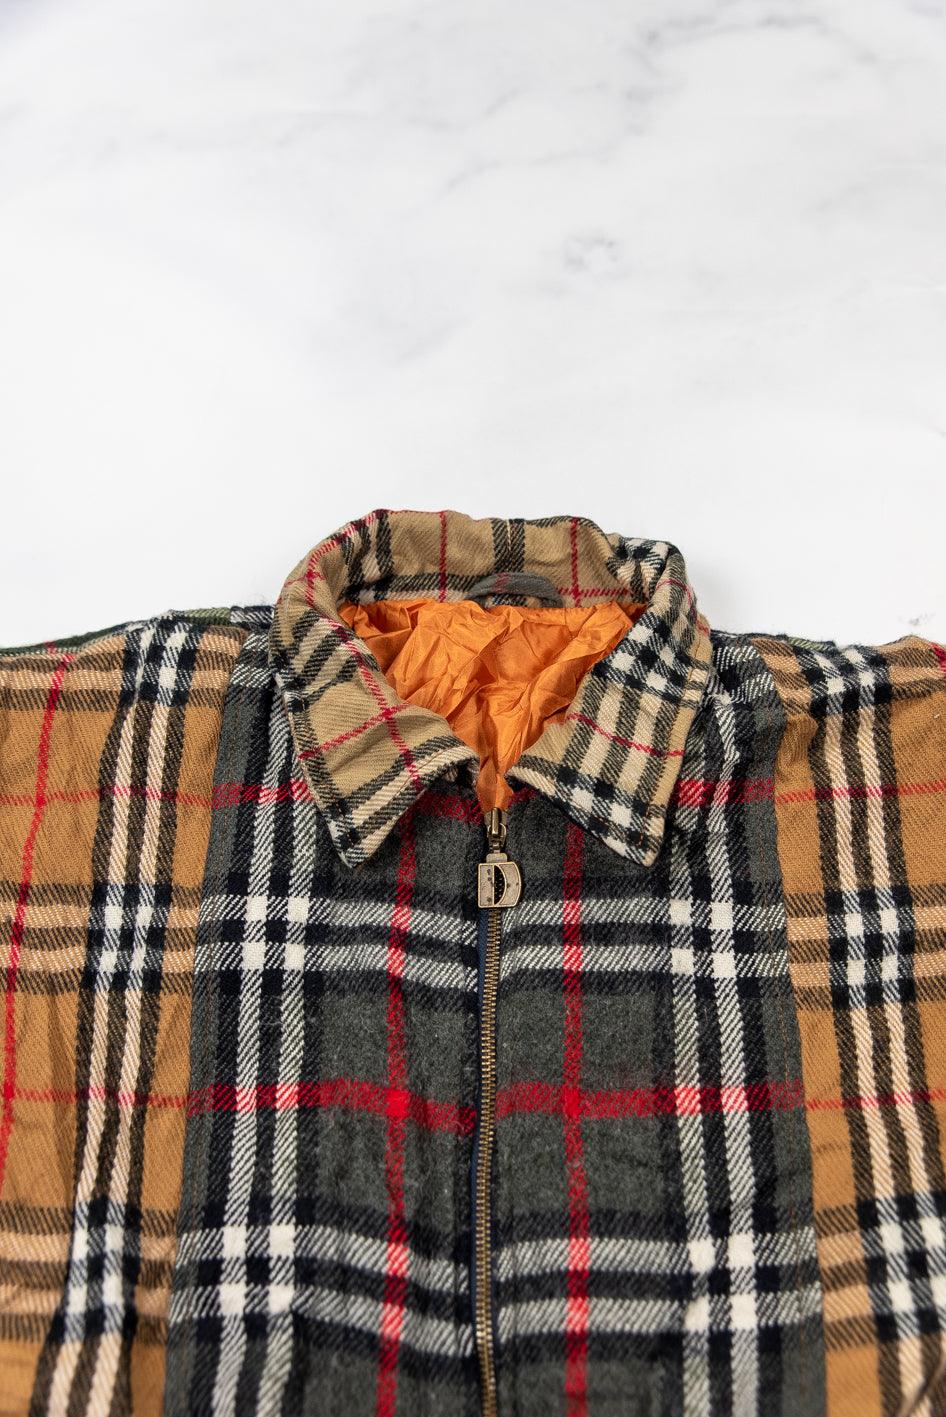 1 of 1 Reworked Jacket from Vintage Burberry Scarfs no31 - Dreambutdonotsleep